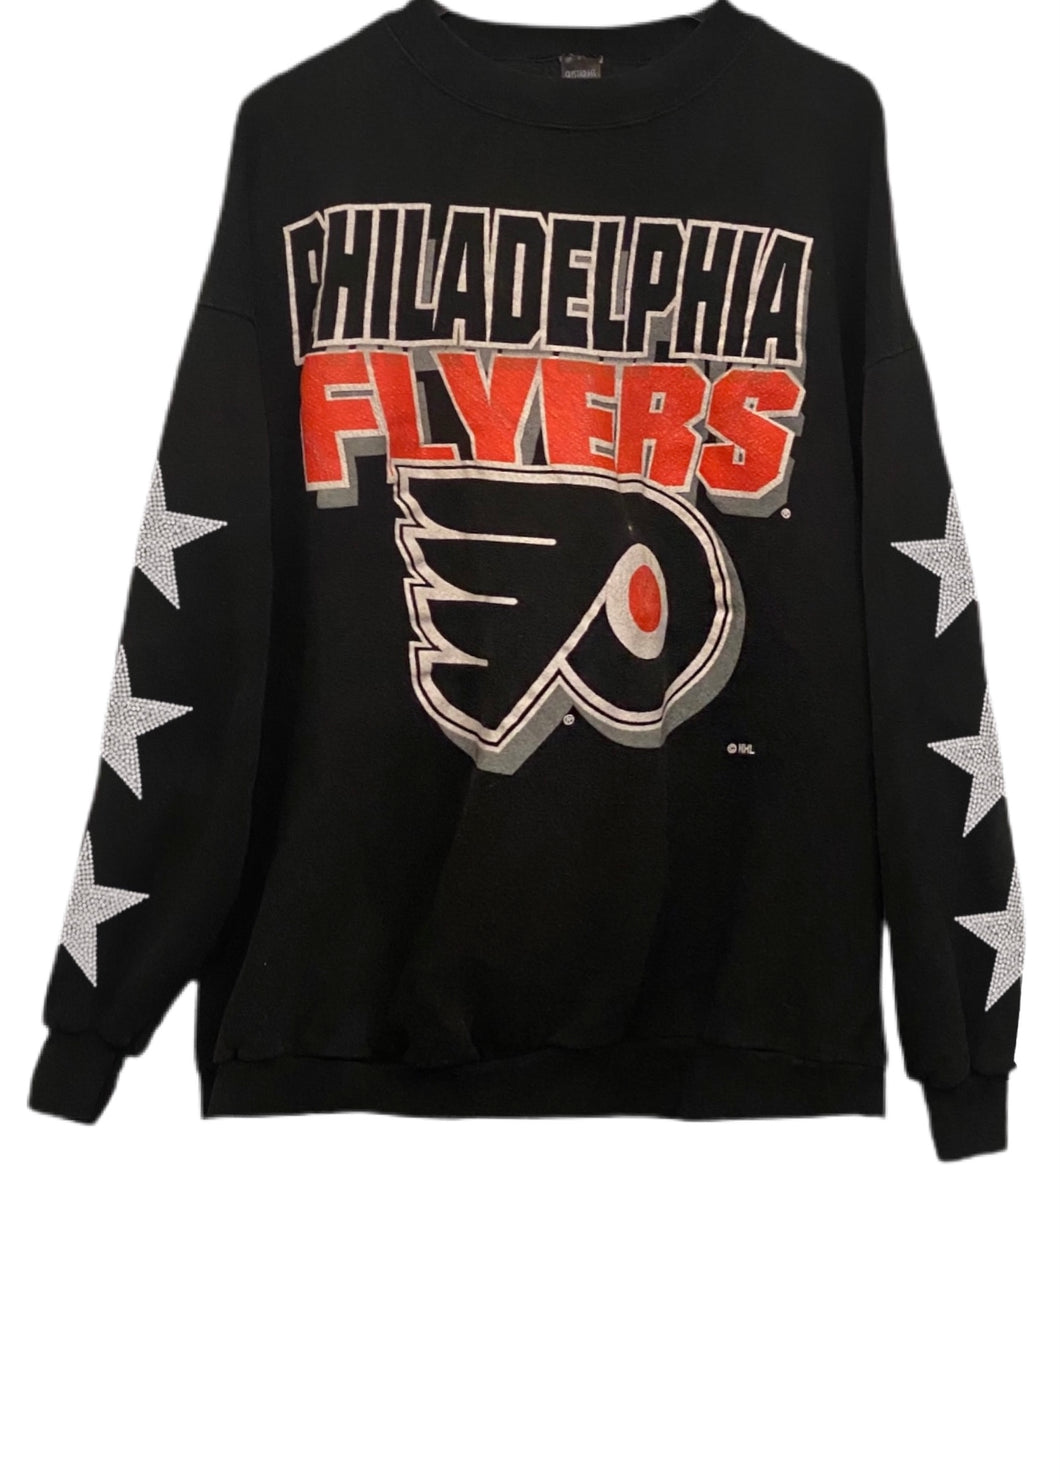 Philadelphia Flyers, NHL One of a KIND Vintage Sweatshirt with Three Crystal Star Design